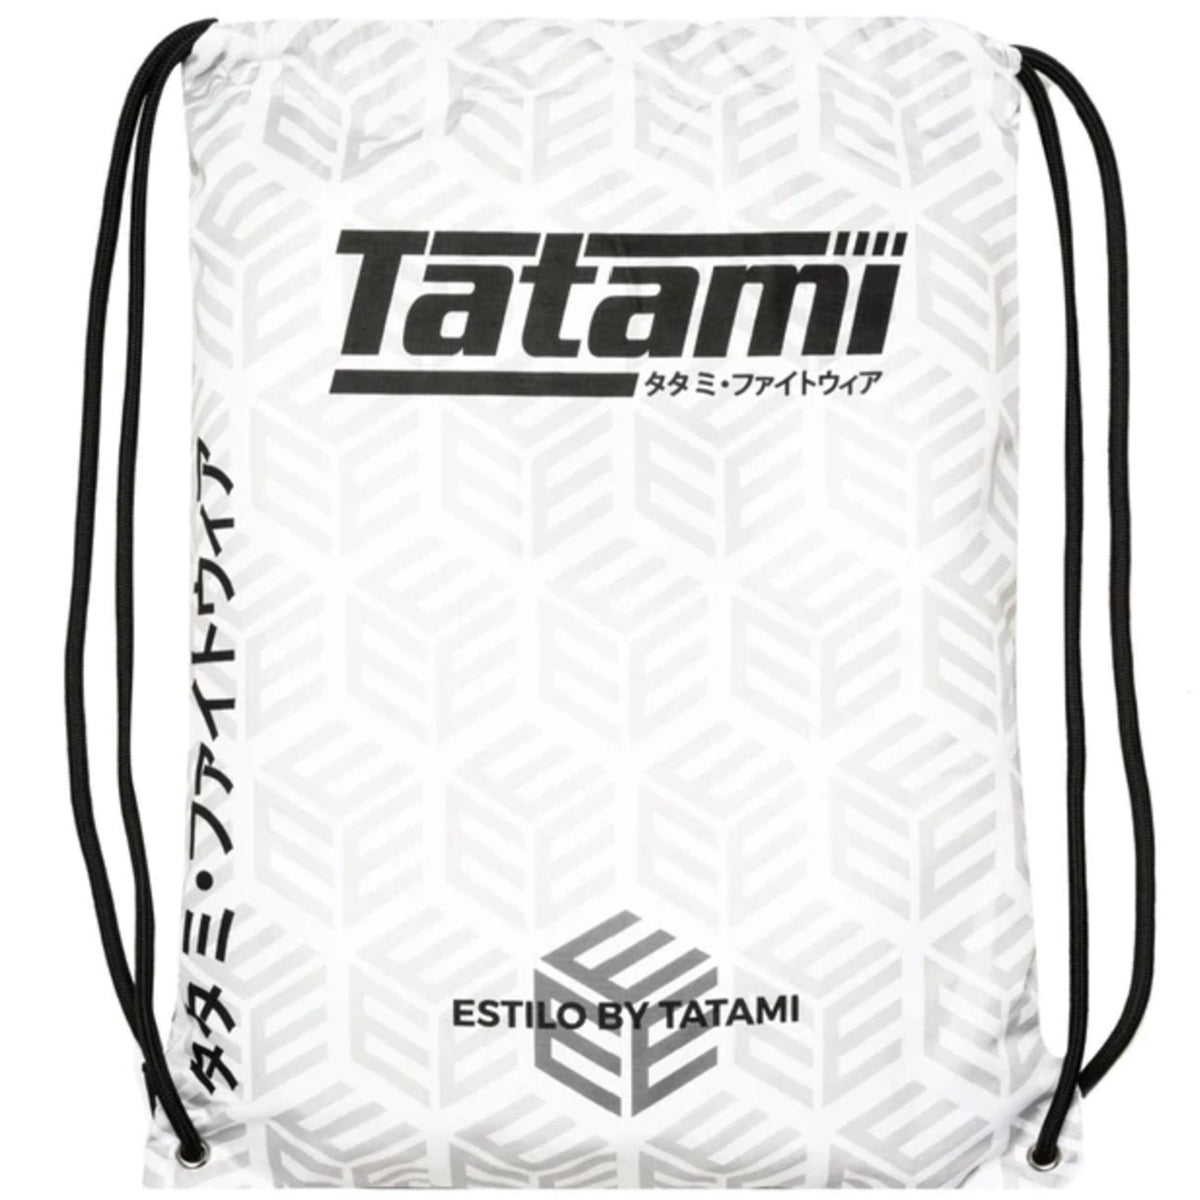 Tatami Fightwear Estilo Black Label BJJ Gi - White/White Tatami Fightwear